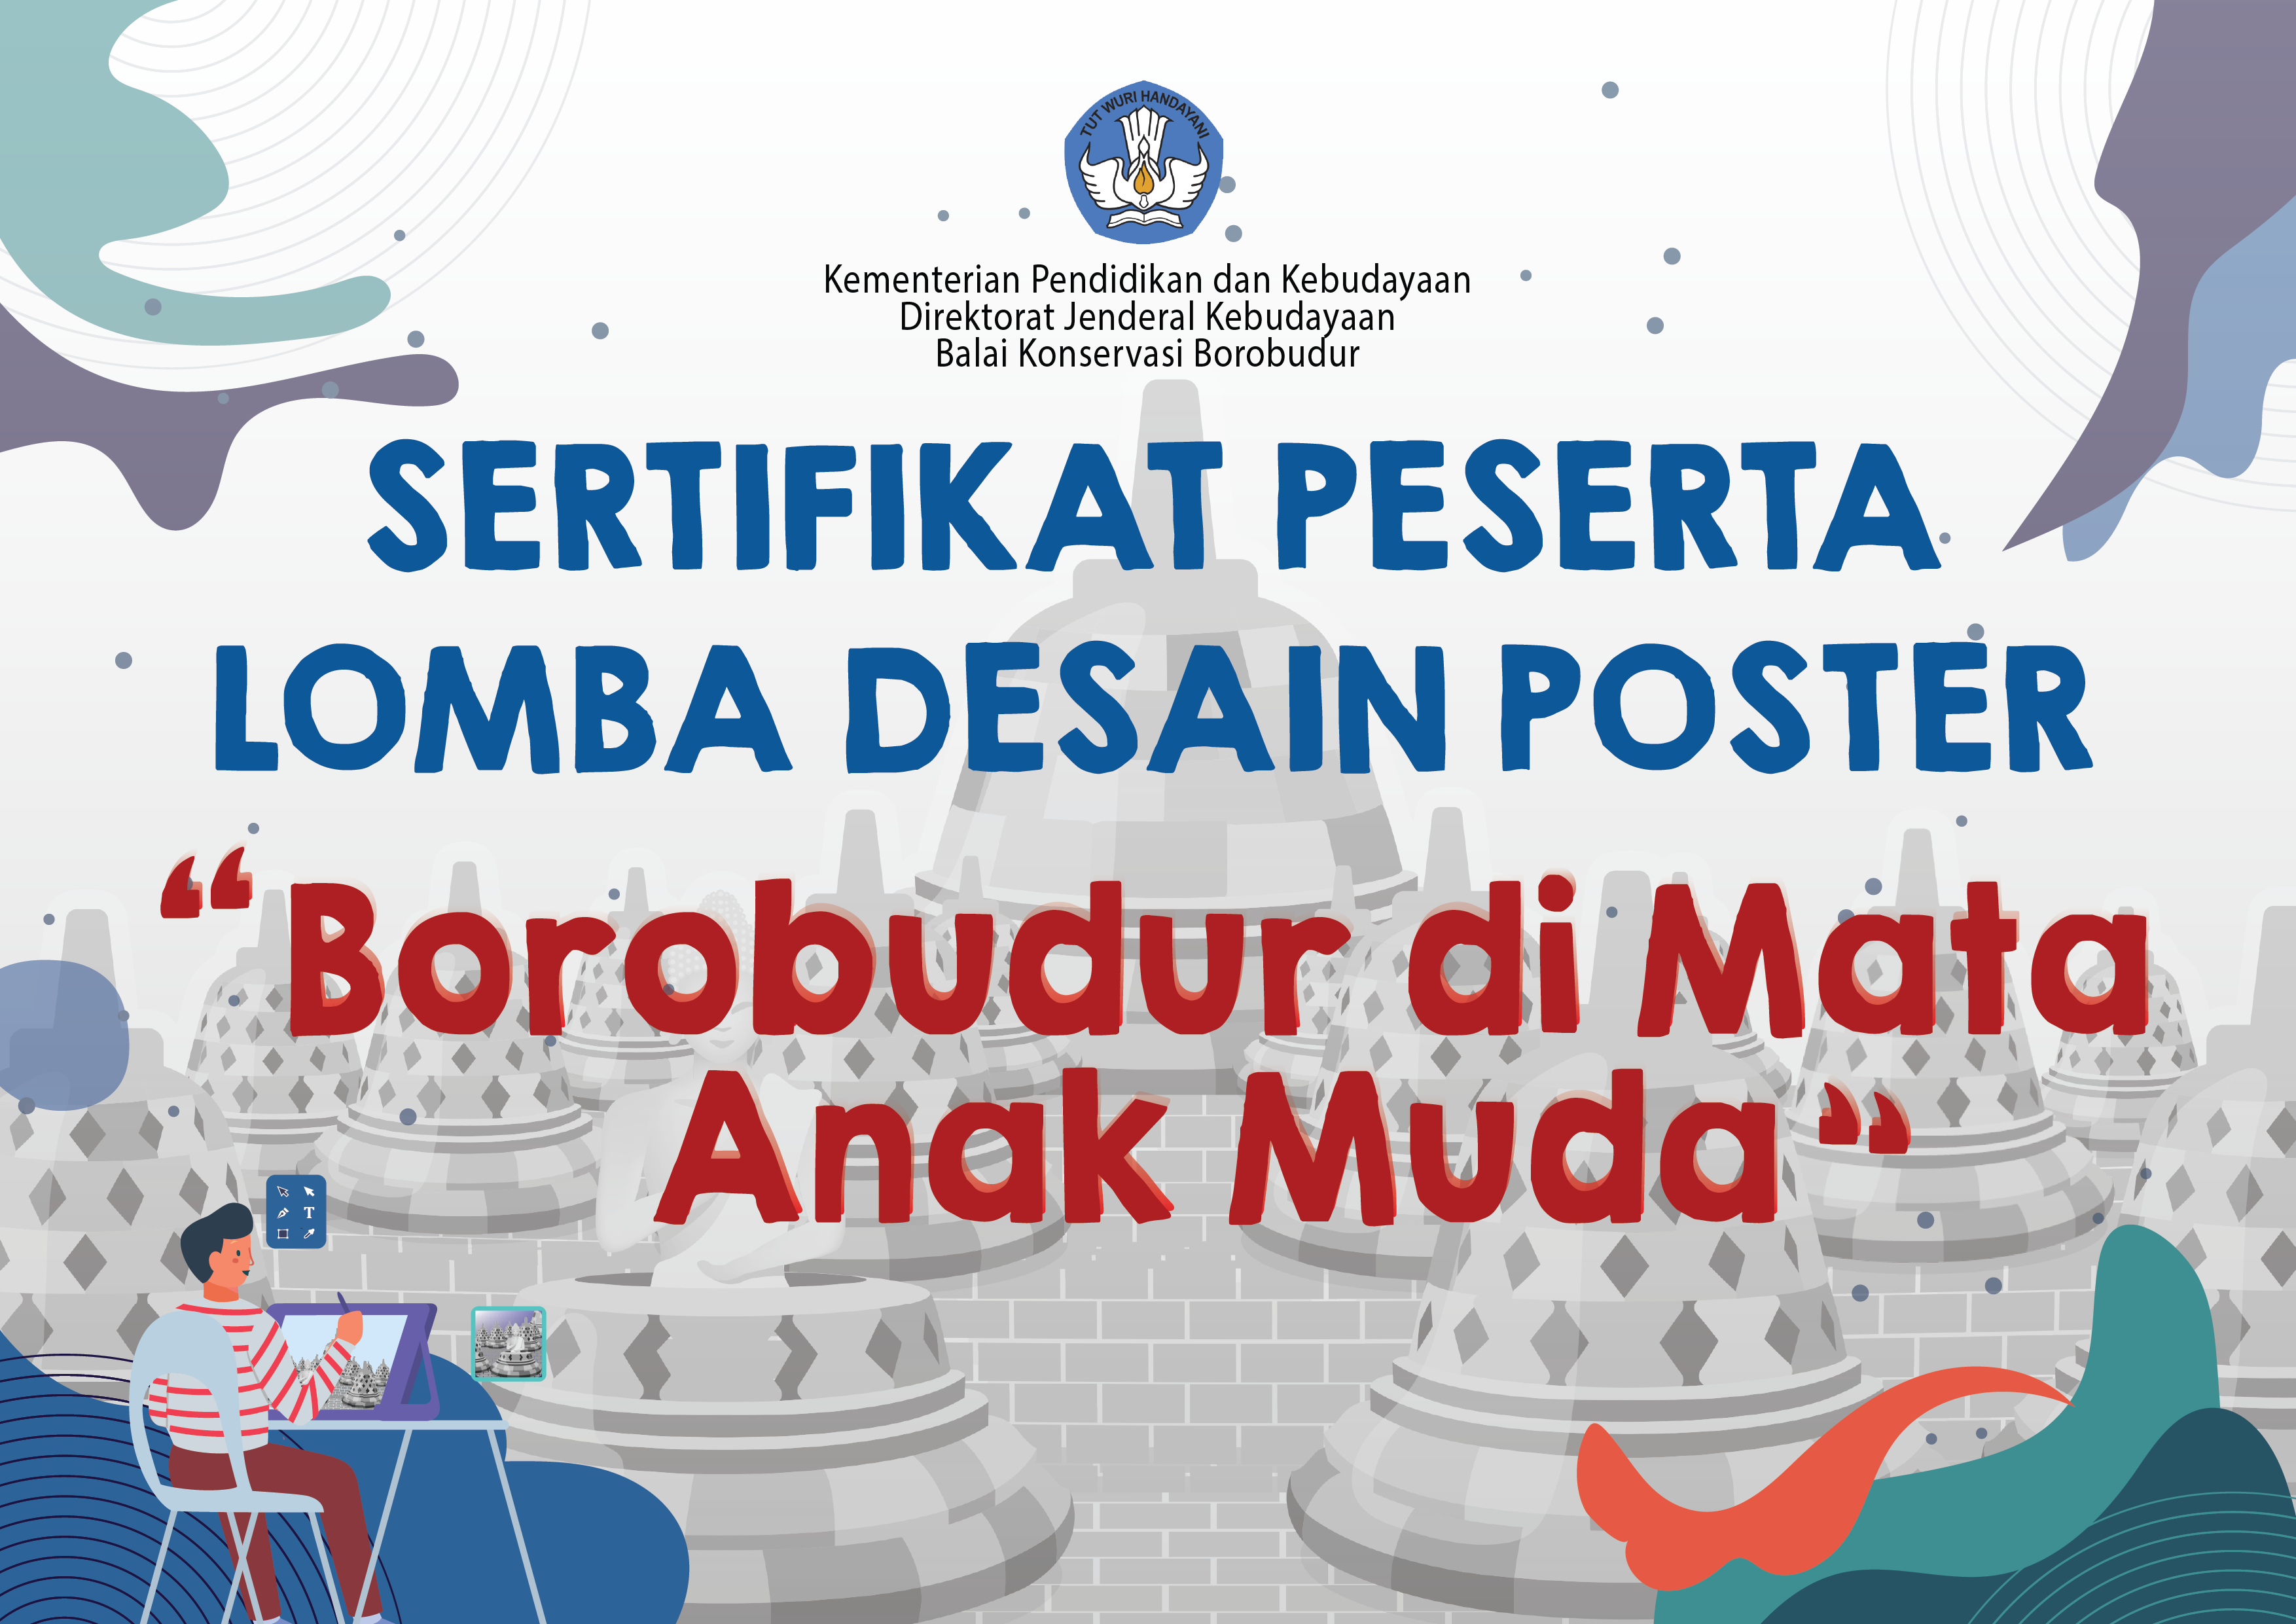 You are currently viewing Sertifikat Peserta Lomba Desain Poster